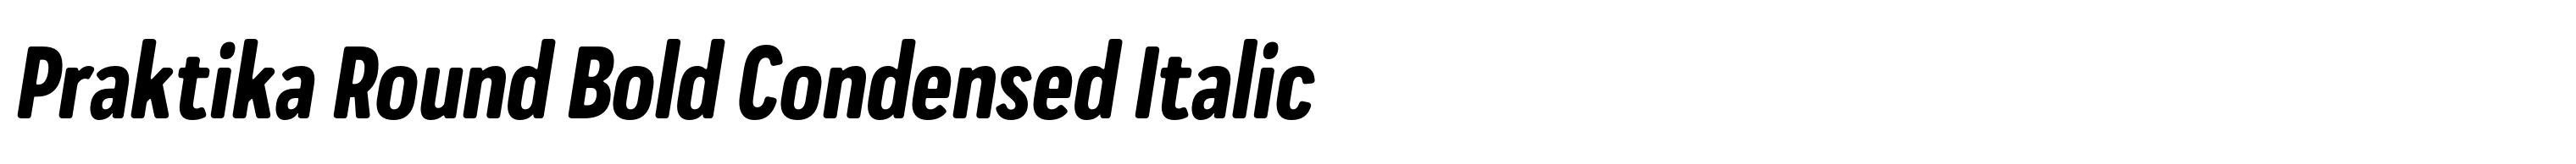 Praktika Round Bold Condensed Italic